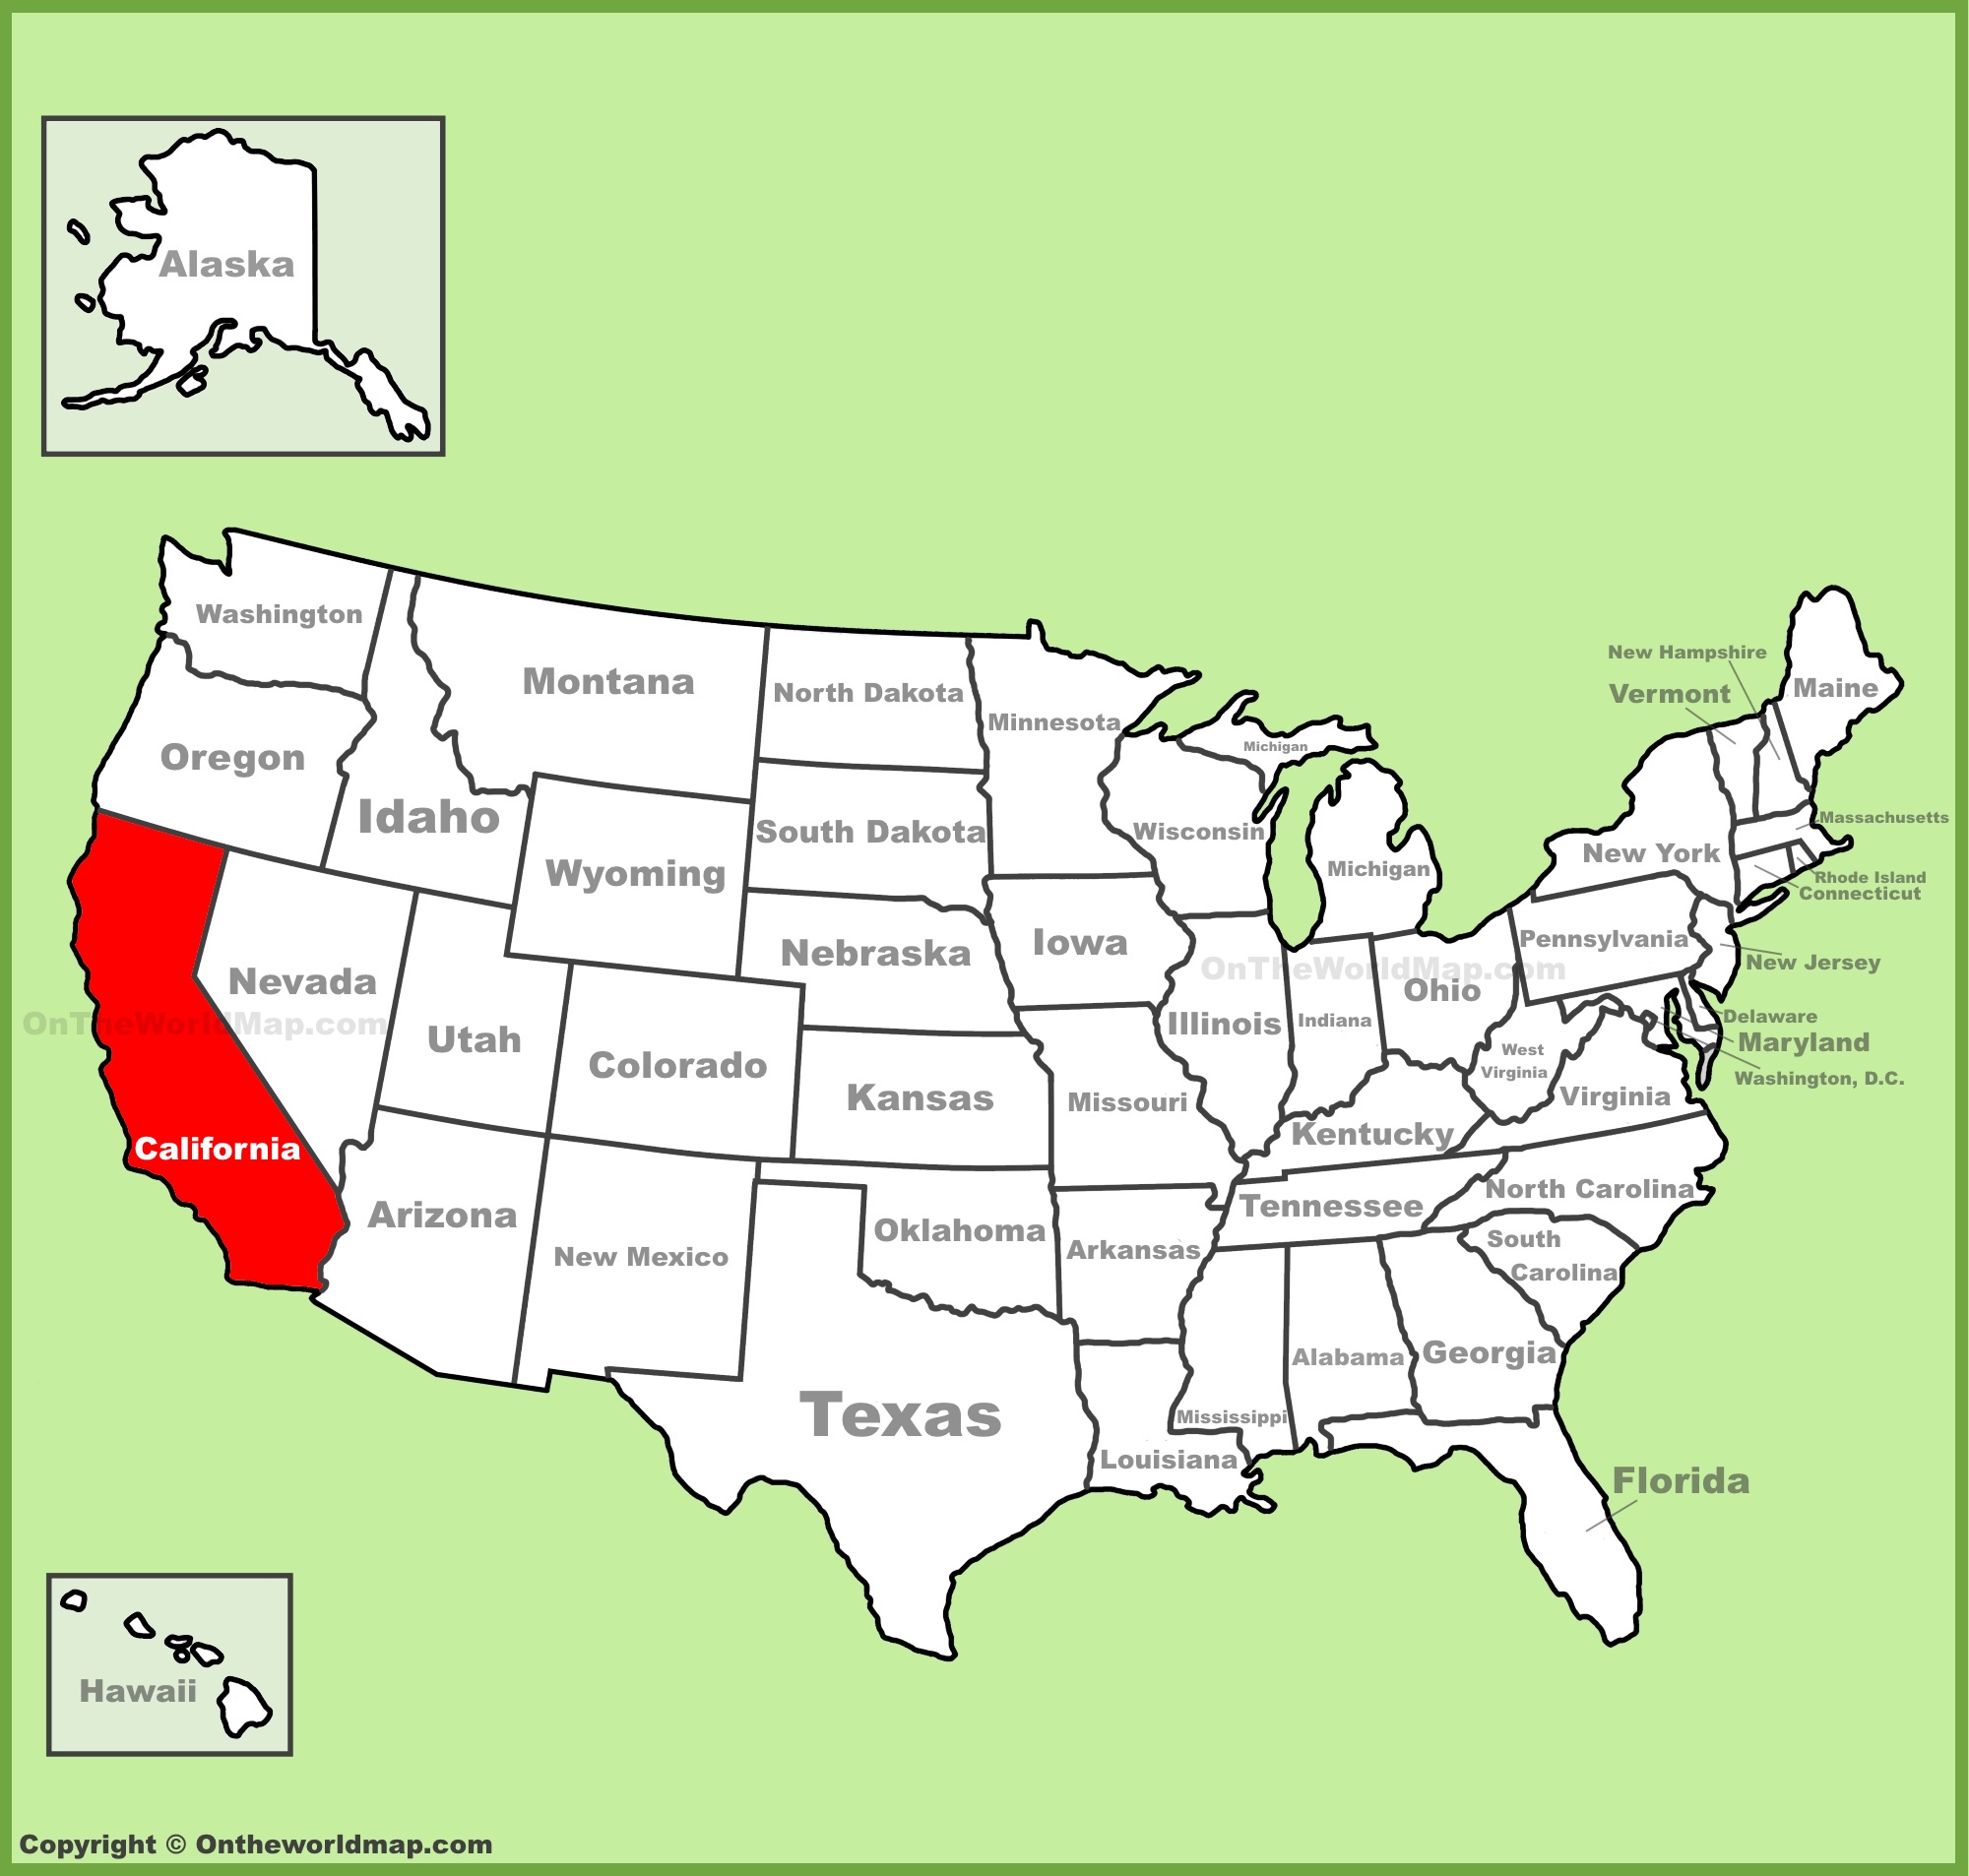 california on the us map California Location On The U S Map california on the us map